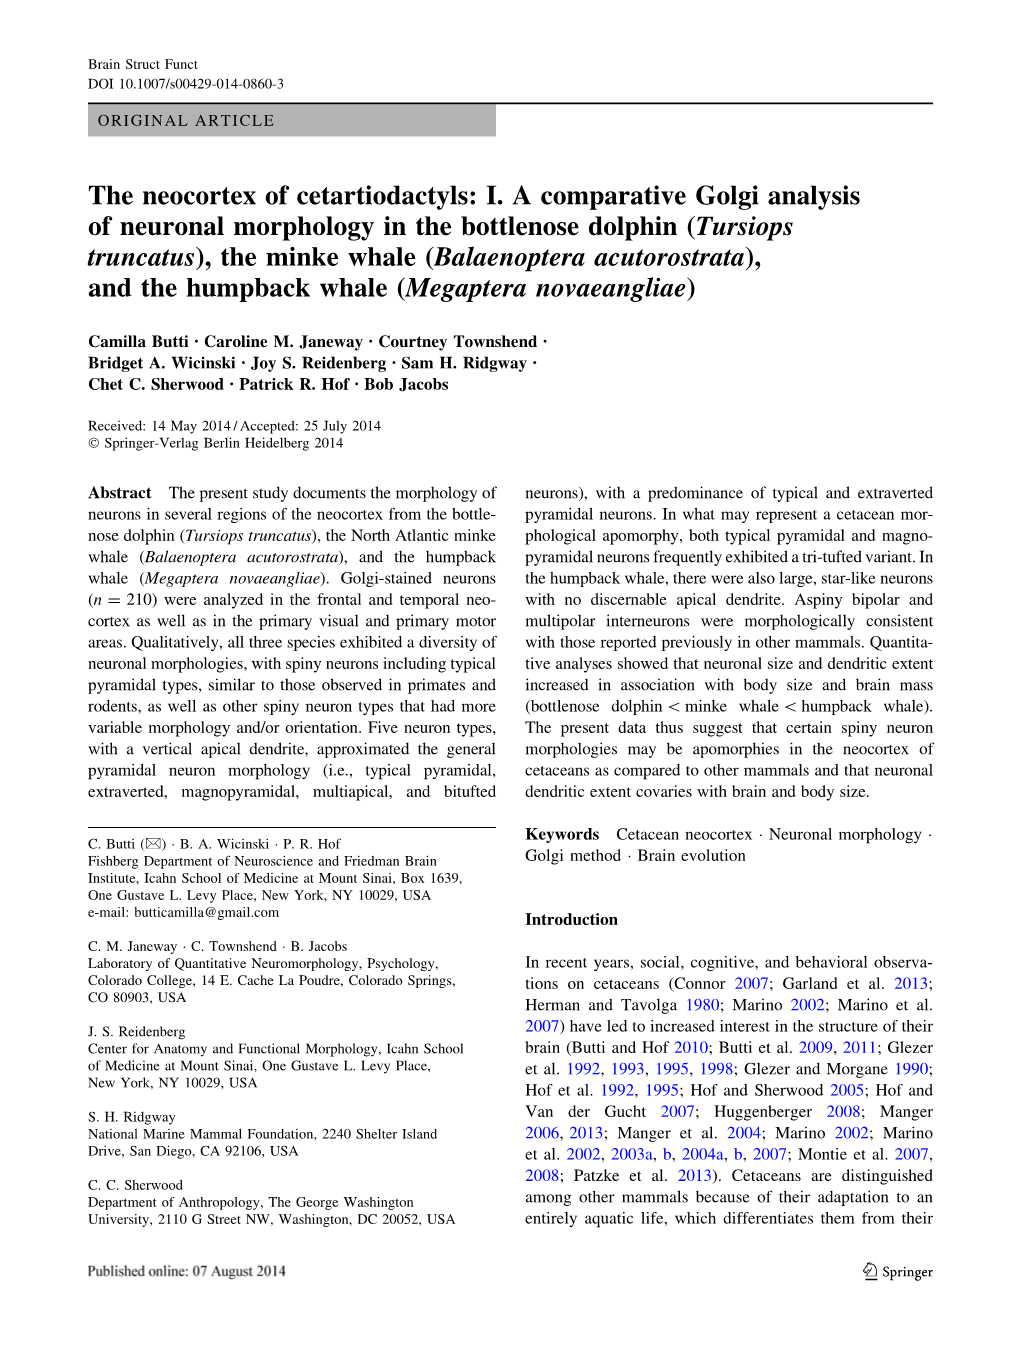 The Neocortex of Cetartiodactyls: I. a Comparative